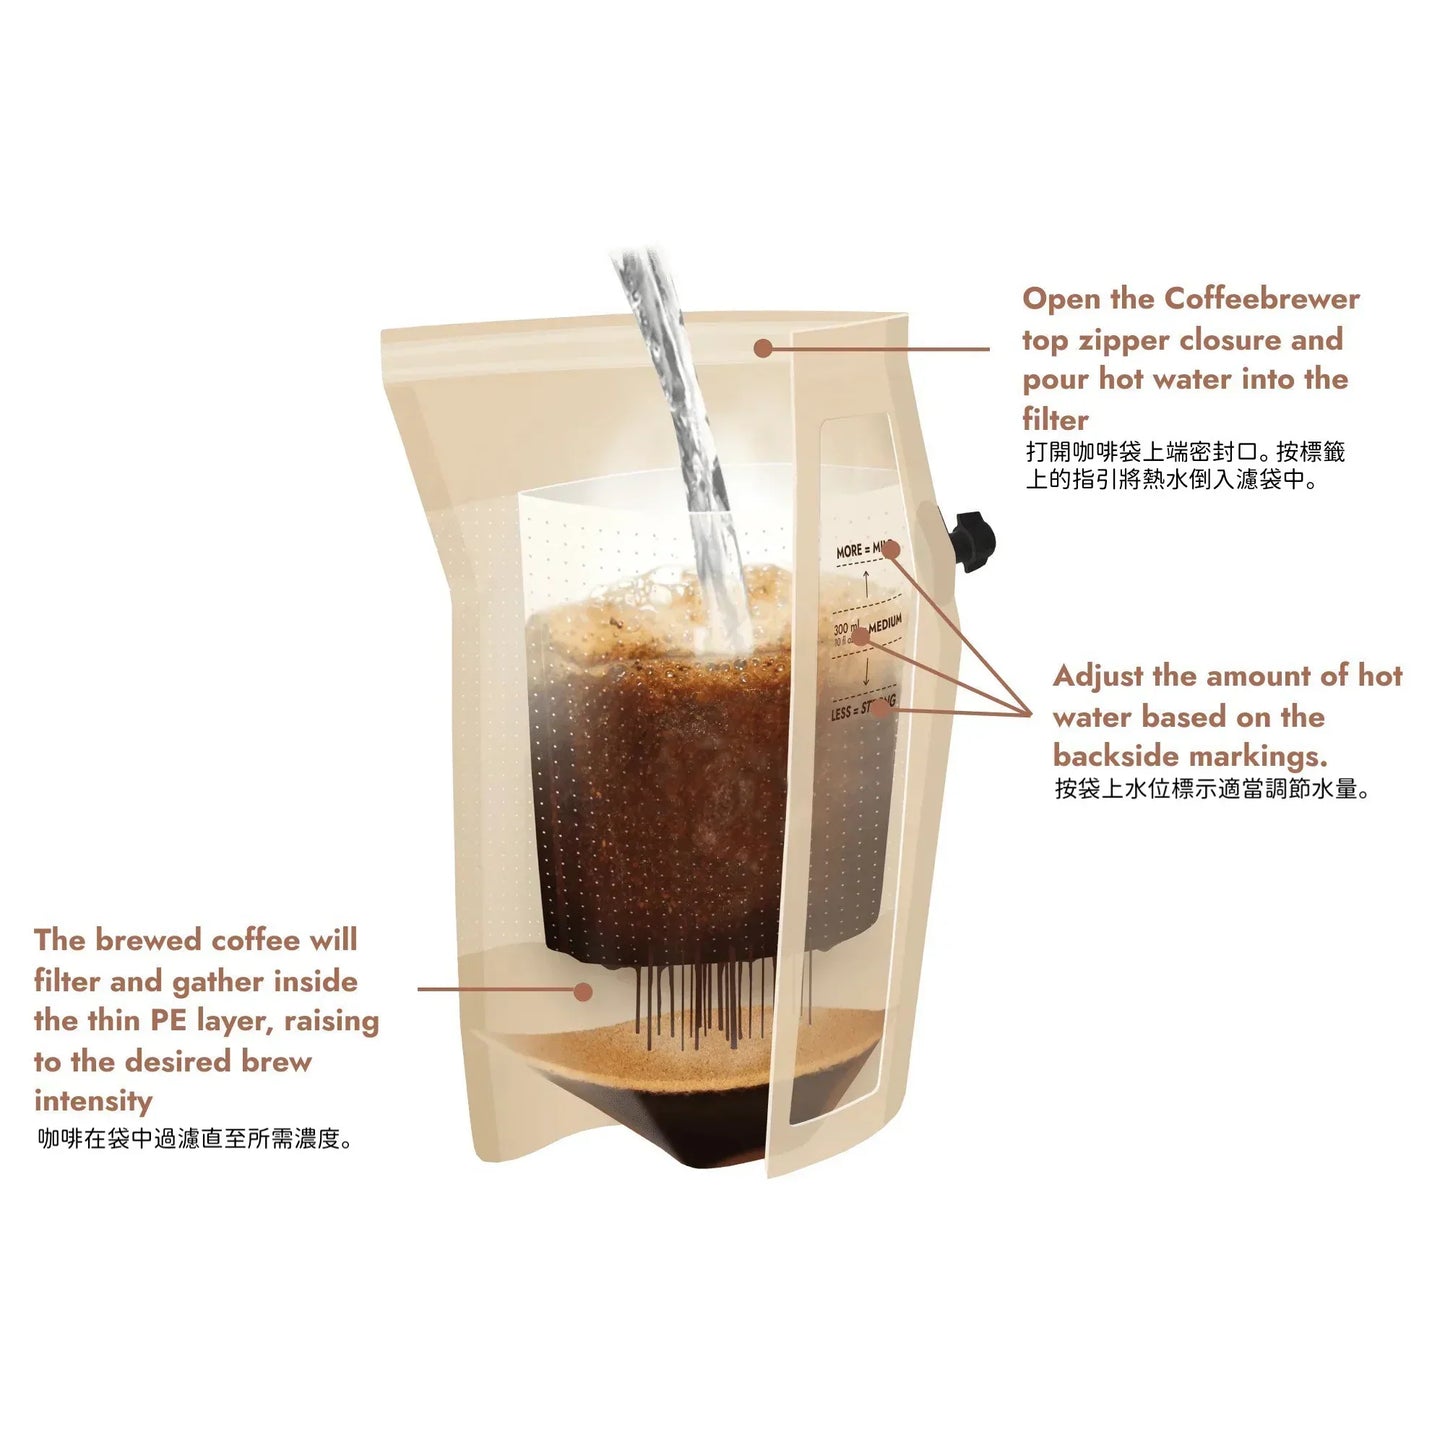 Grower’s Cup Coffeebrewer (El Salvador 薩爾瓦多) 便攜式手沖有機及公平交易咖啡包 20g